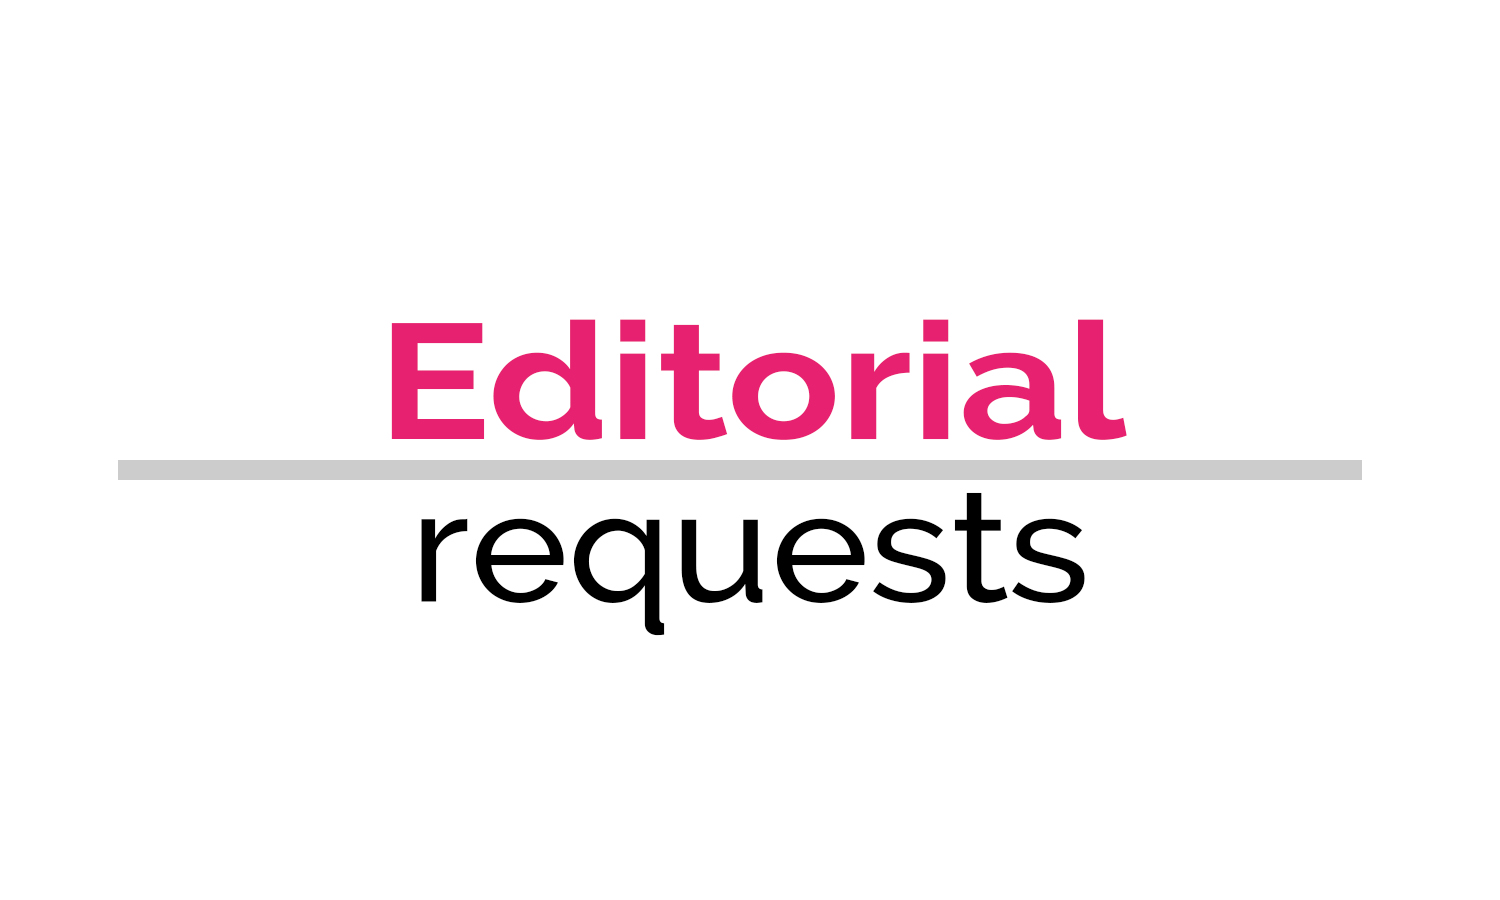 Editorial request etiquette - note to PRs! 